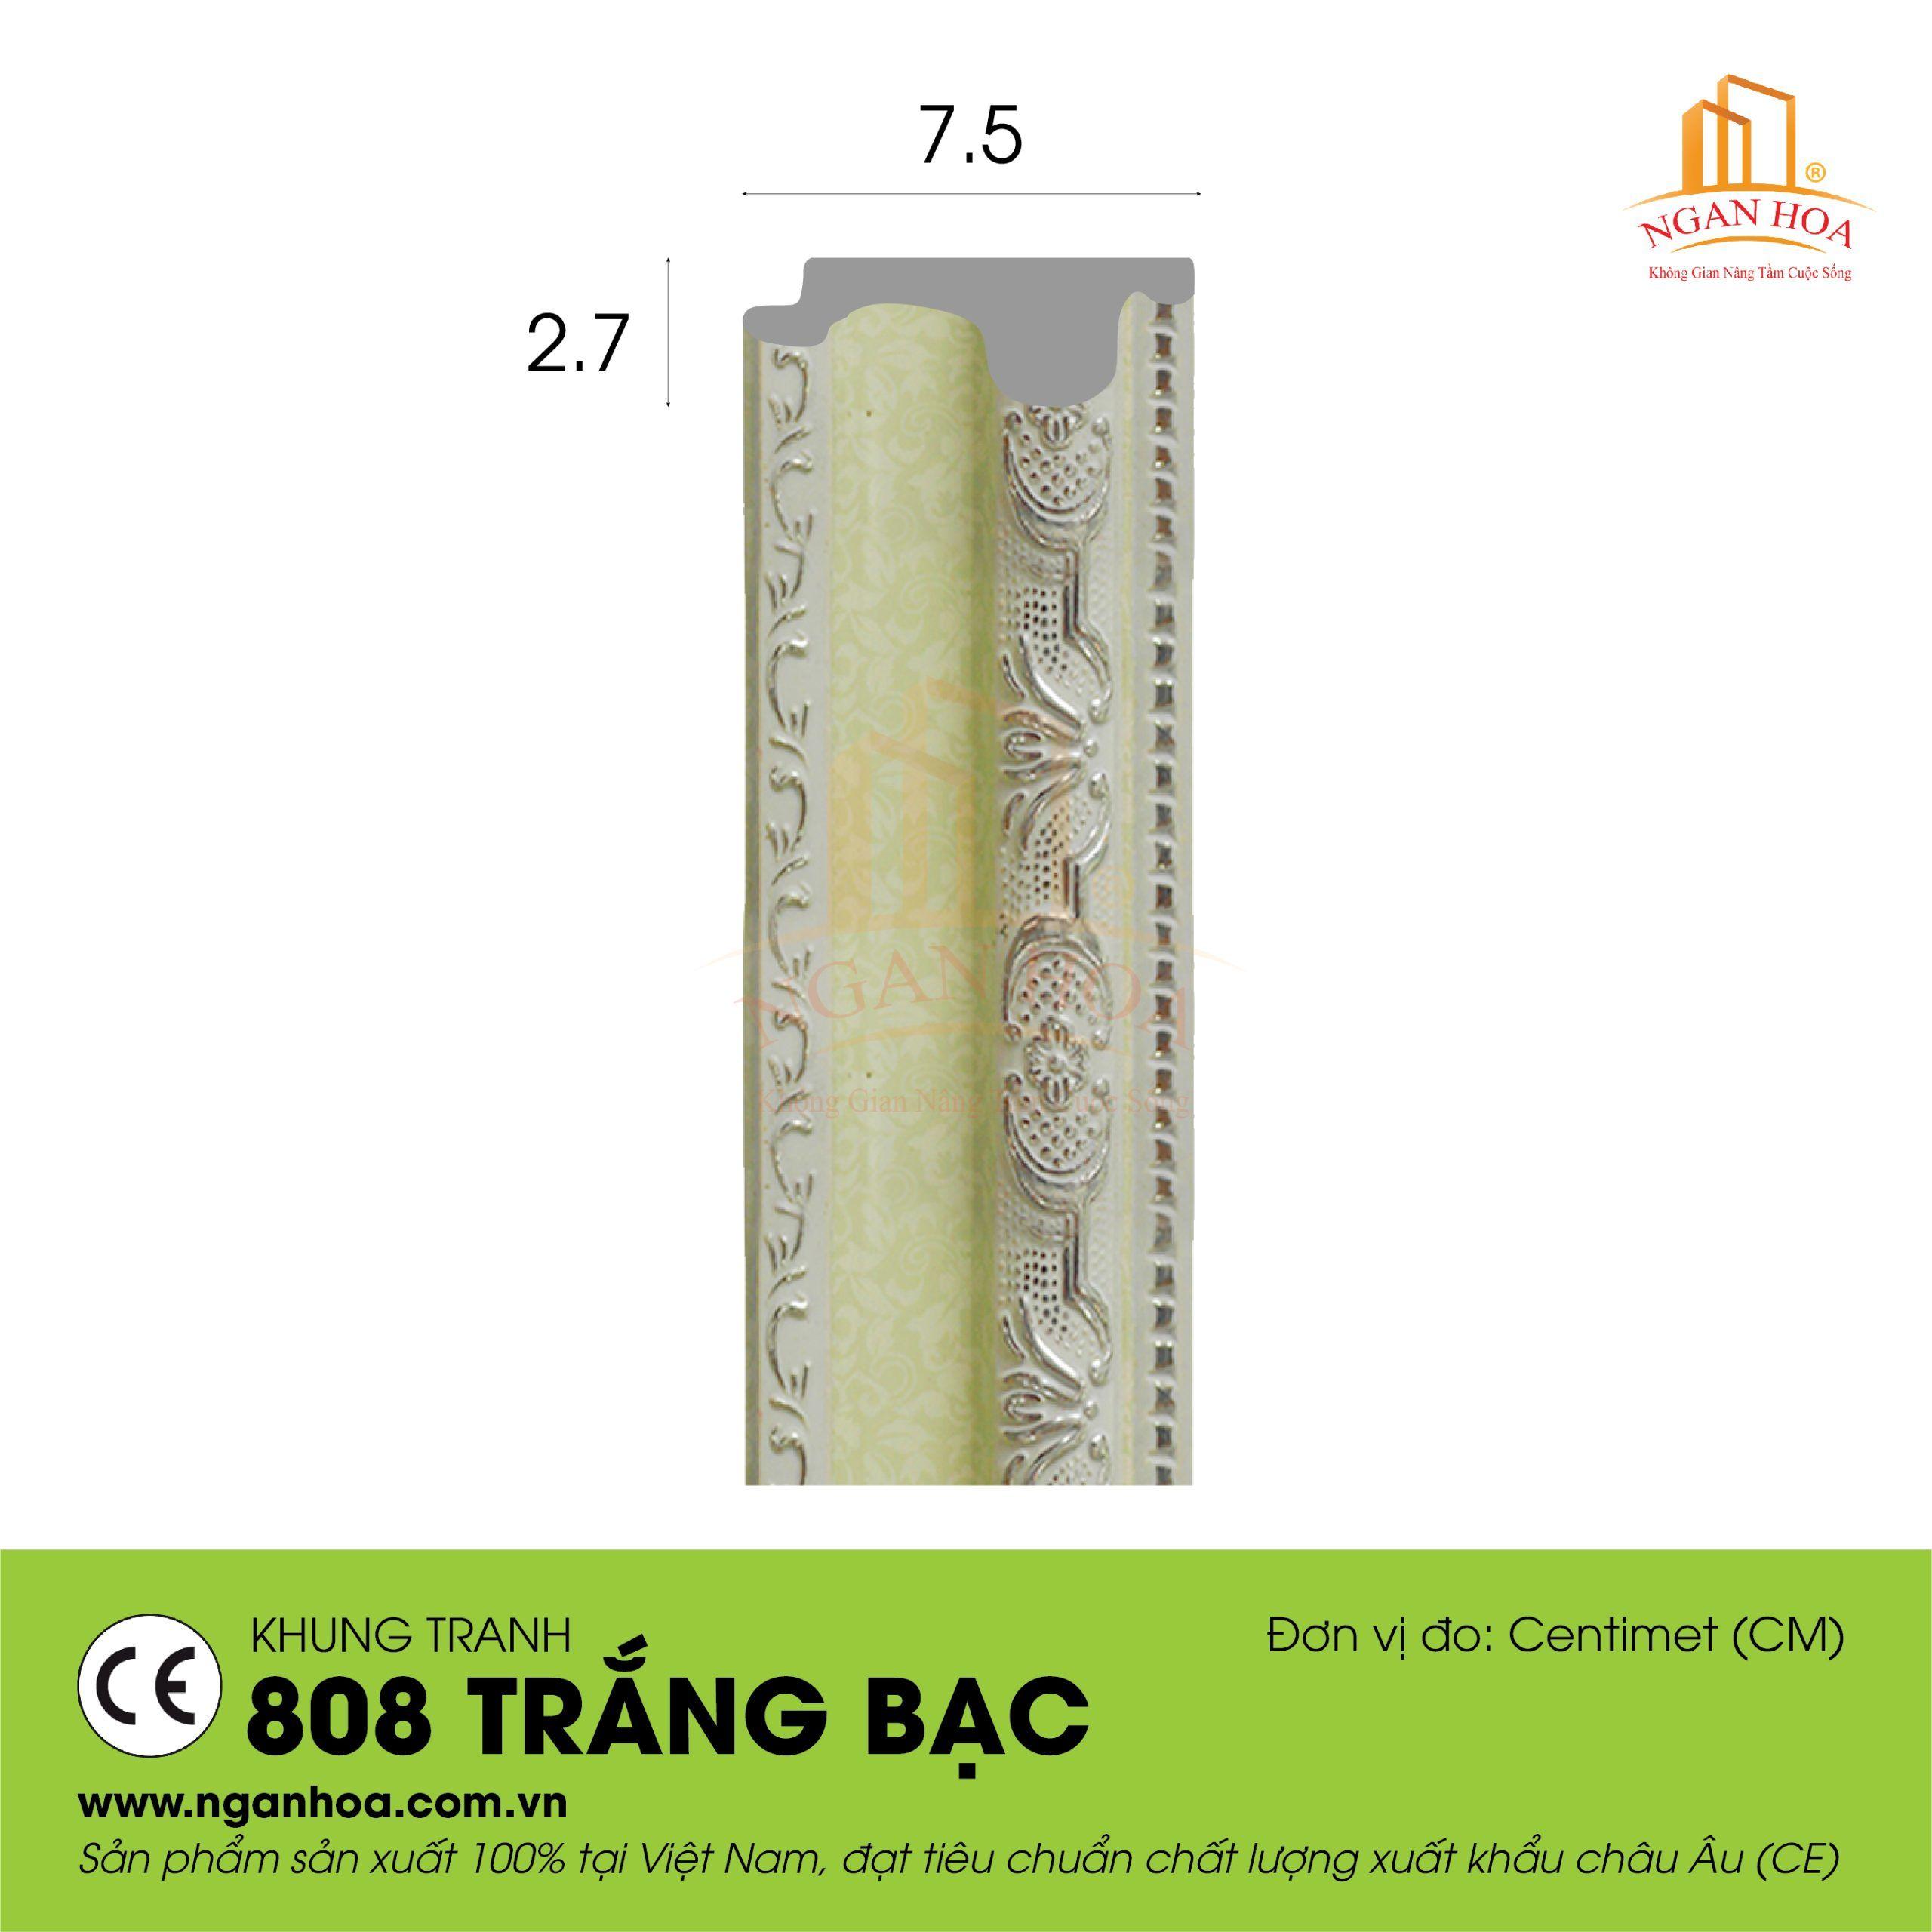 KT 808 Trang bac scaled